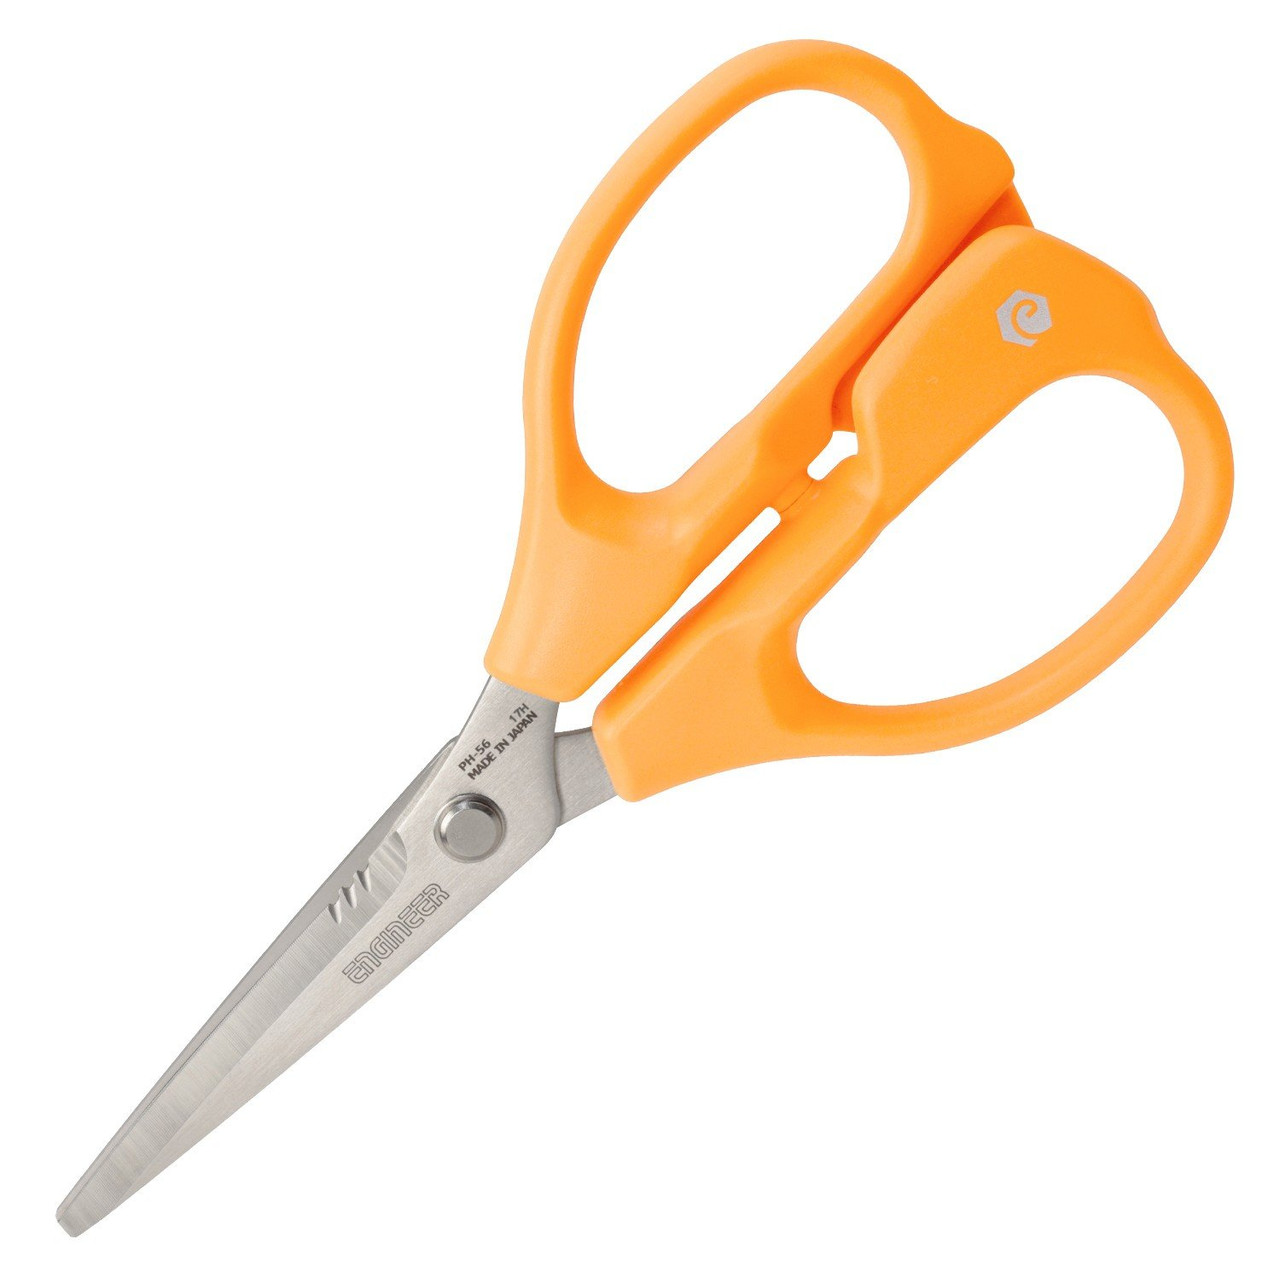 PH-57 heavy duty scissors (multi-function, kevlar capable) 